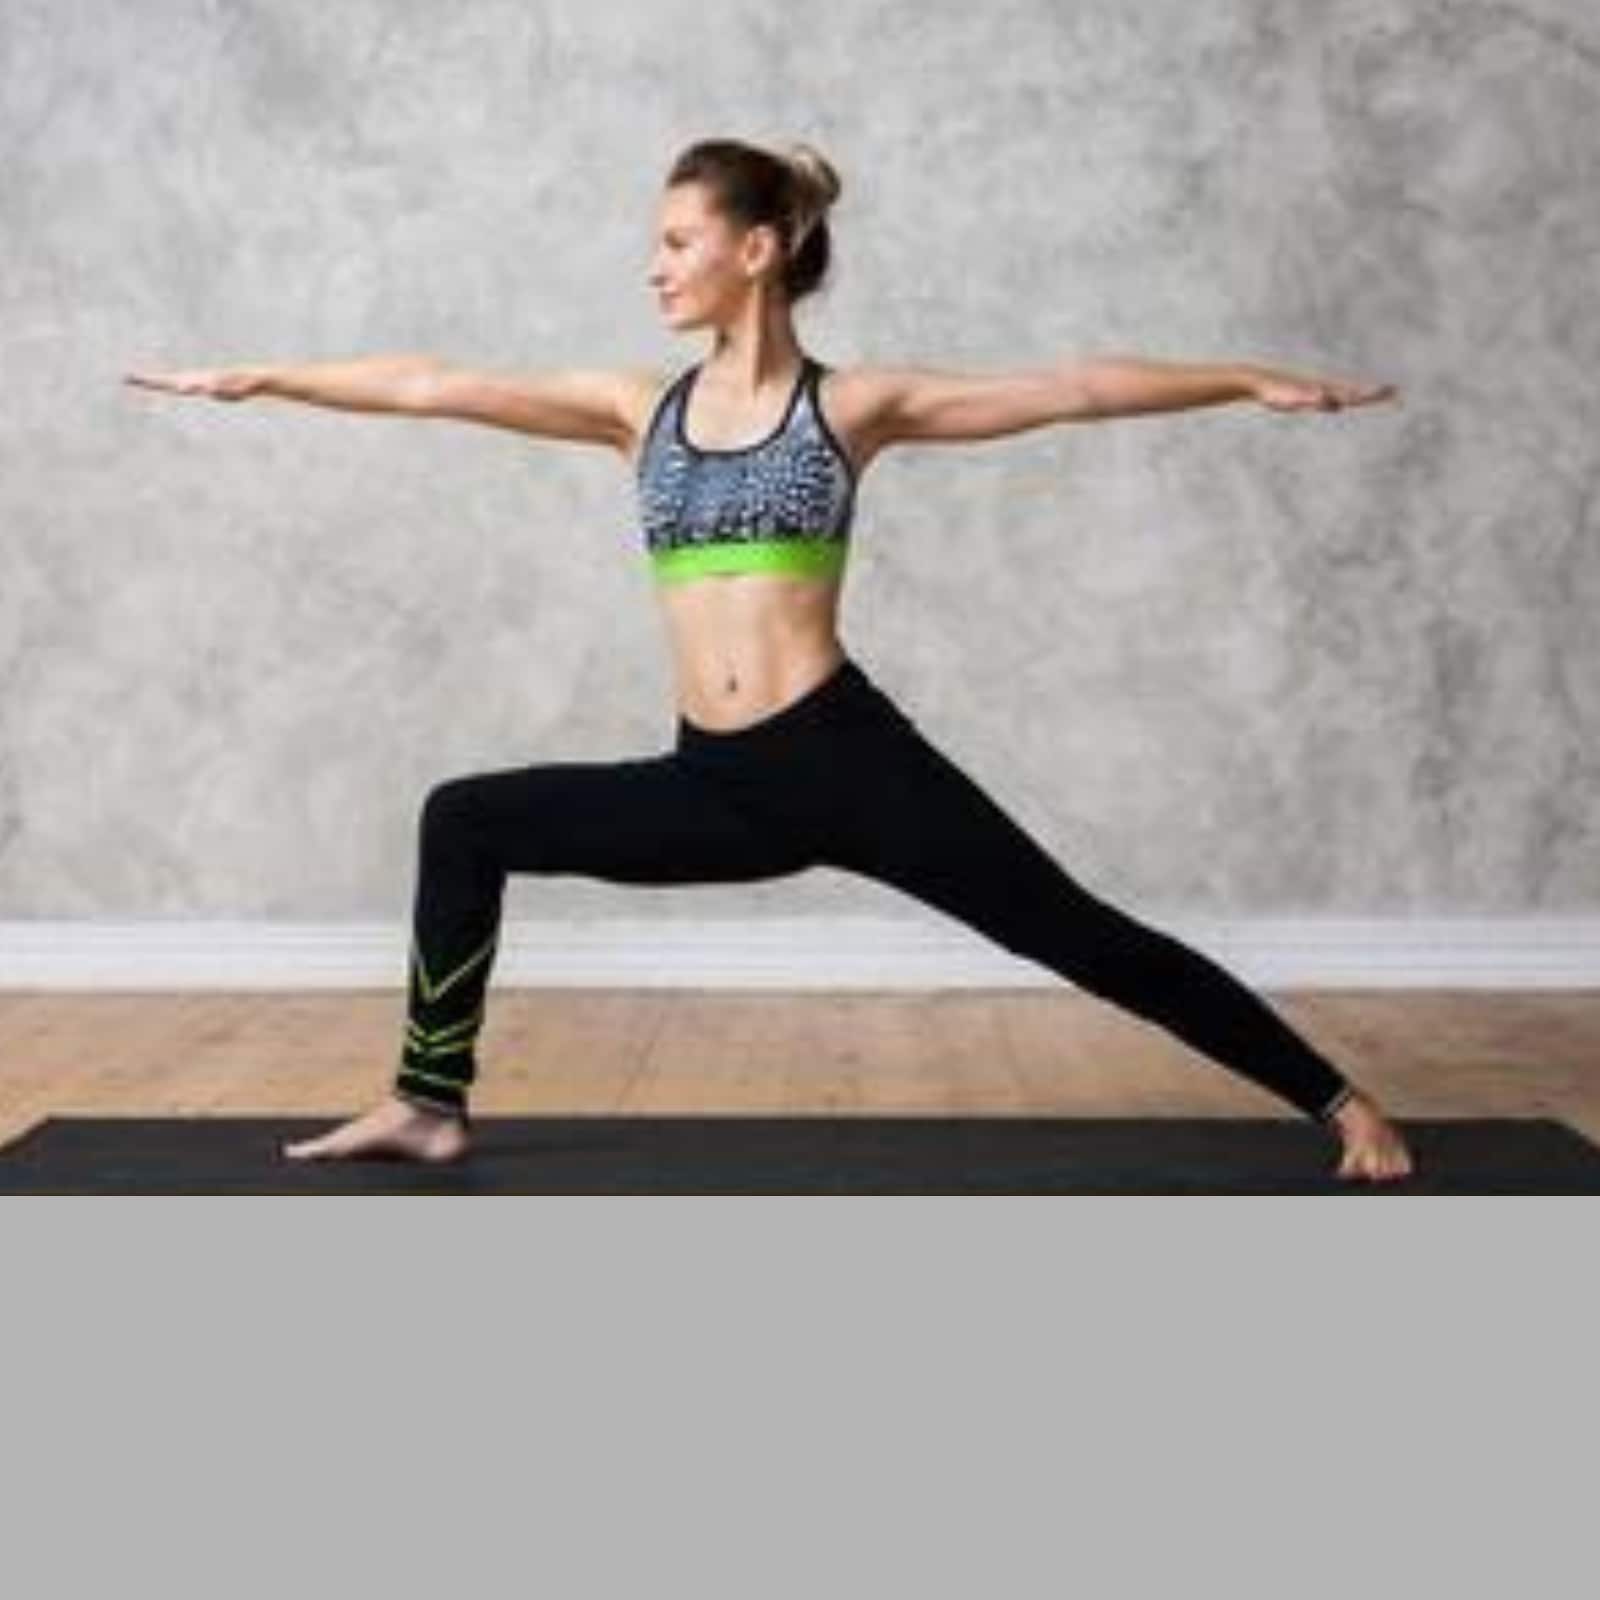 Planks To Warrior Pose: 5 Yoga Asanas To Lose Weight - News18